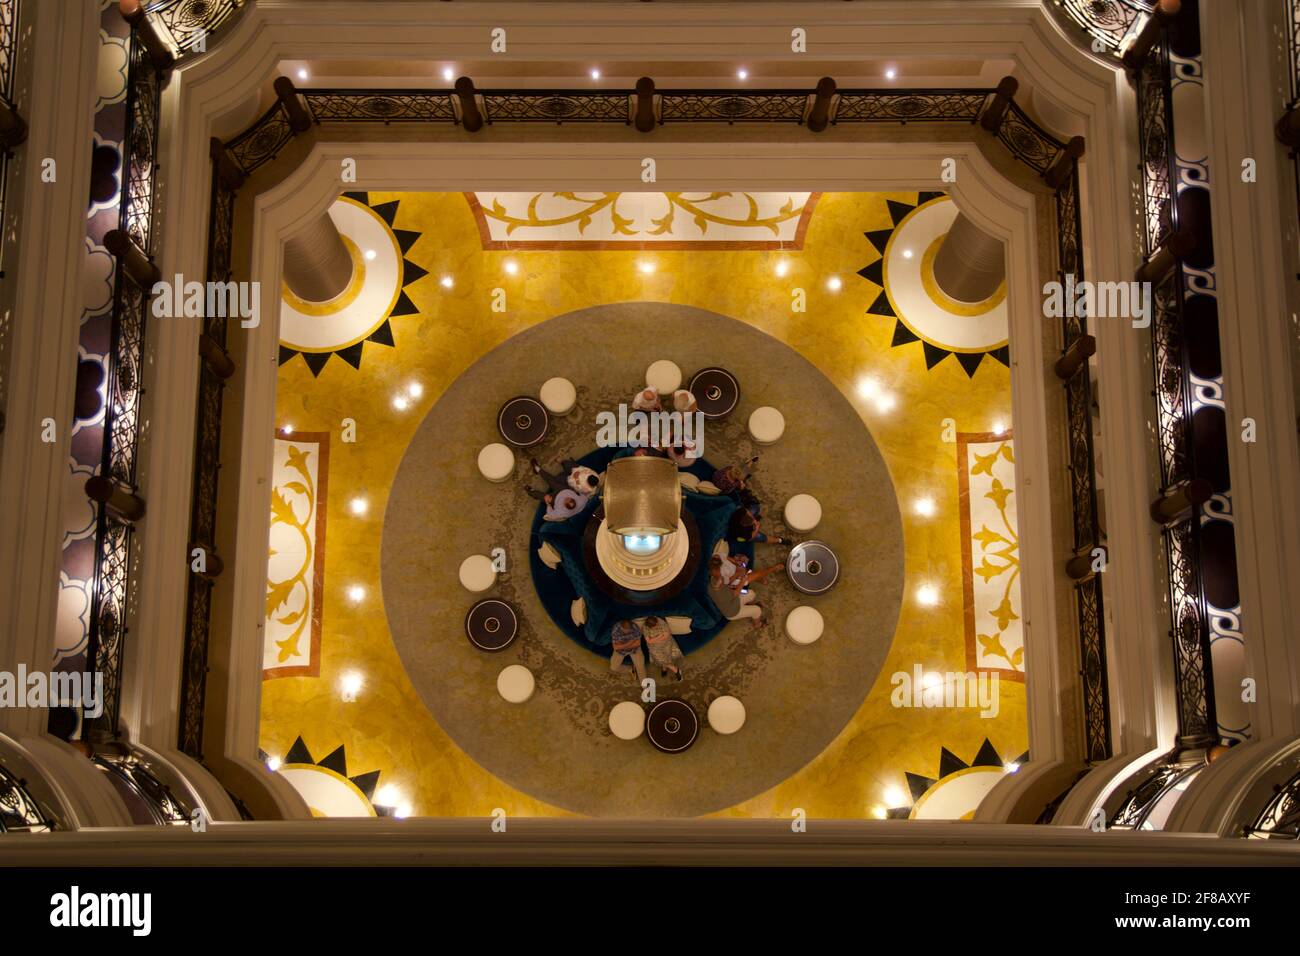 RAS AL KHAIMAH, UNITED ARAB EMIRATES - JUN 13, 2019: Bright and modern interior of luxury lobby in an opulent Arabian style 5-star hotel Waldorf Stock Photo